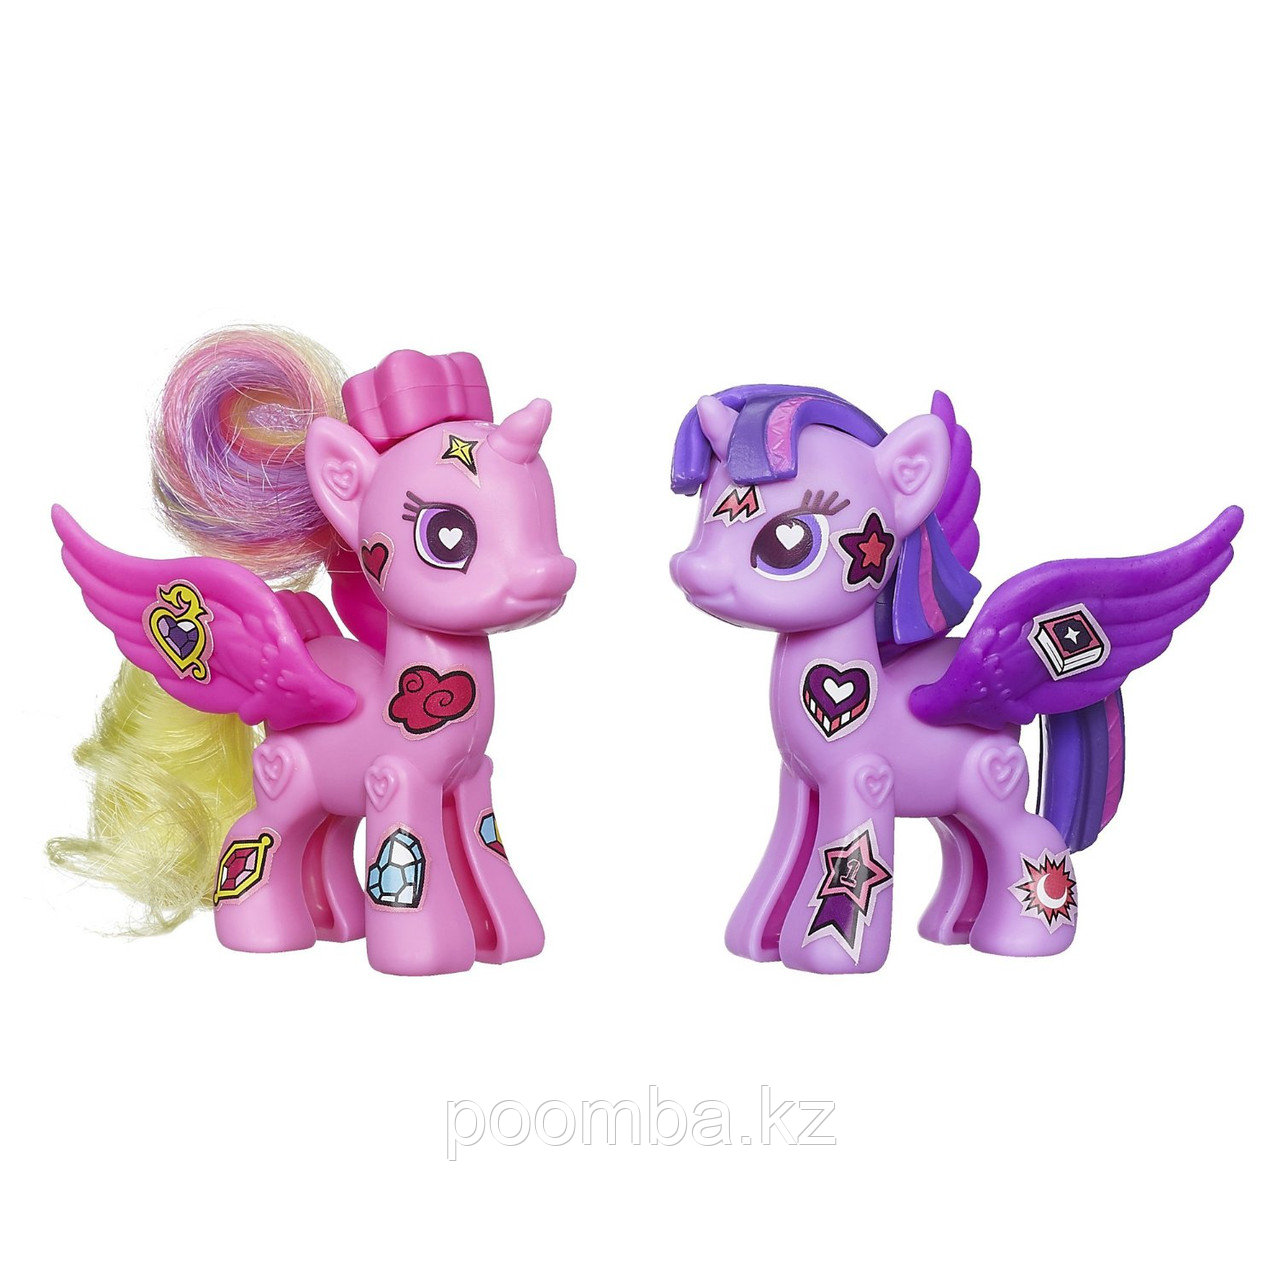 Поп-конструктор My Little Pony "Делюкс"- Принцесса Каденс и Принцесса Твайлайт